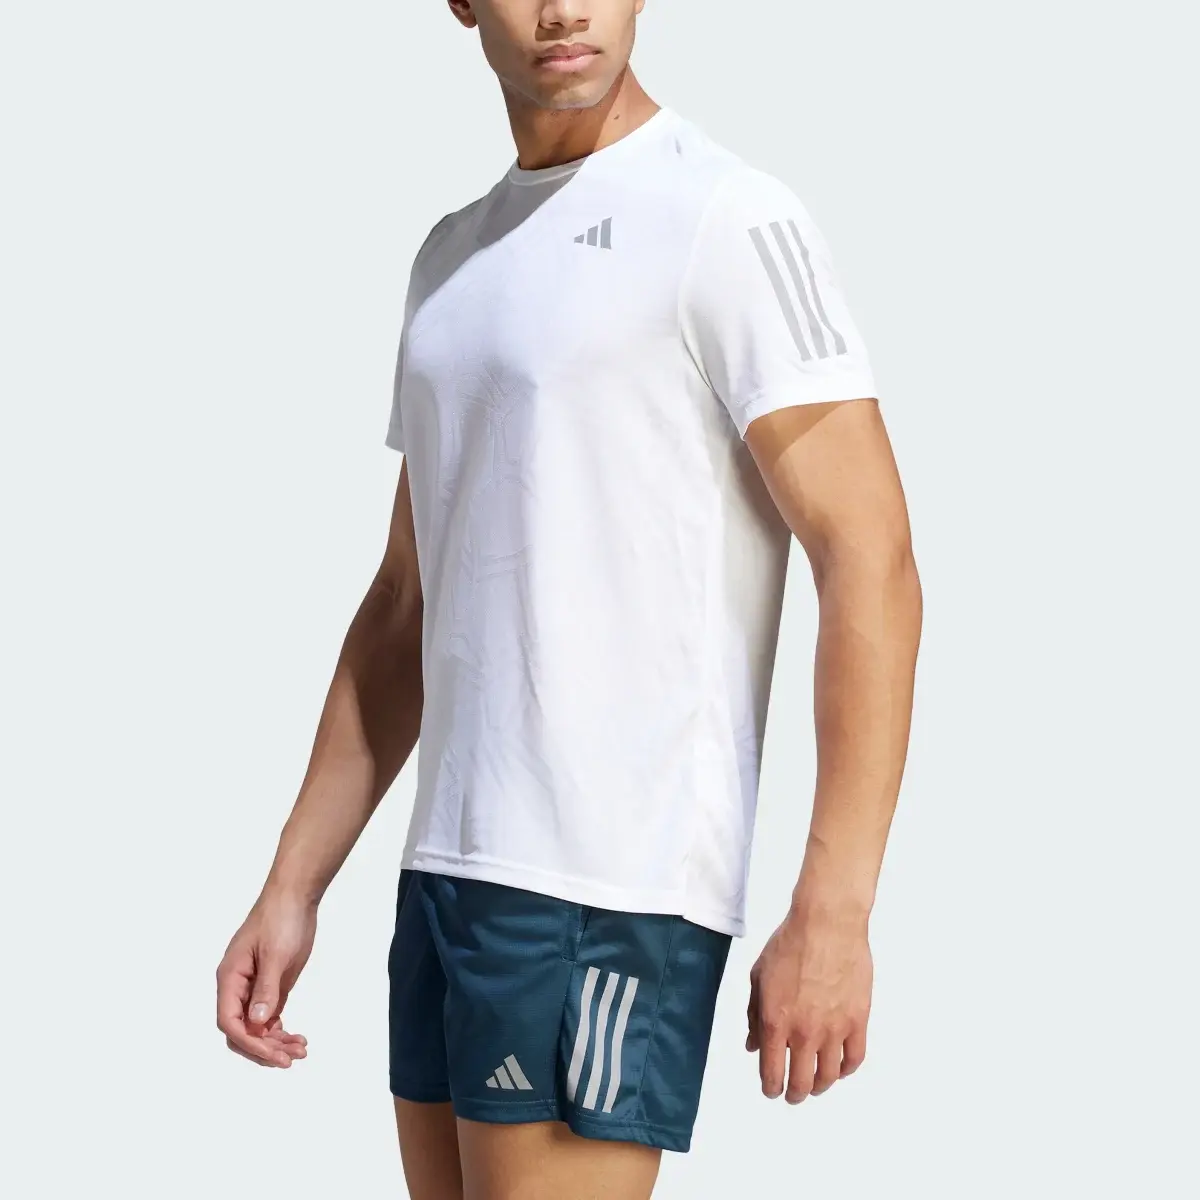 Adidas T-shirt Own the Run Carbon Meastured. 1